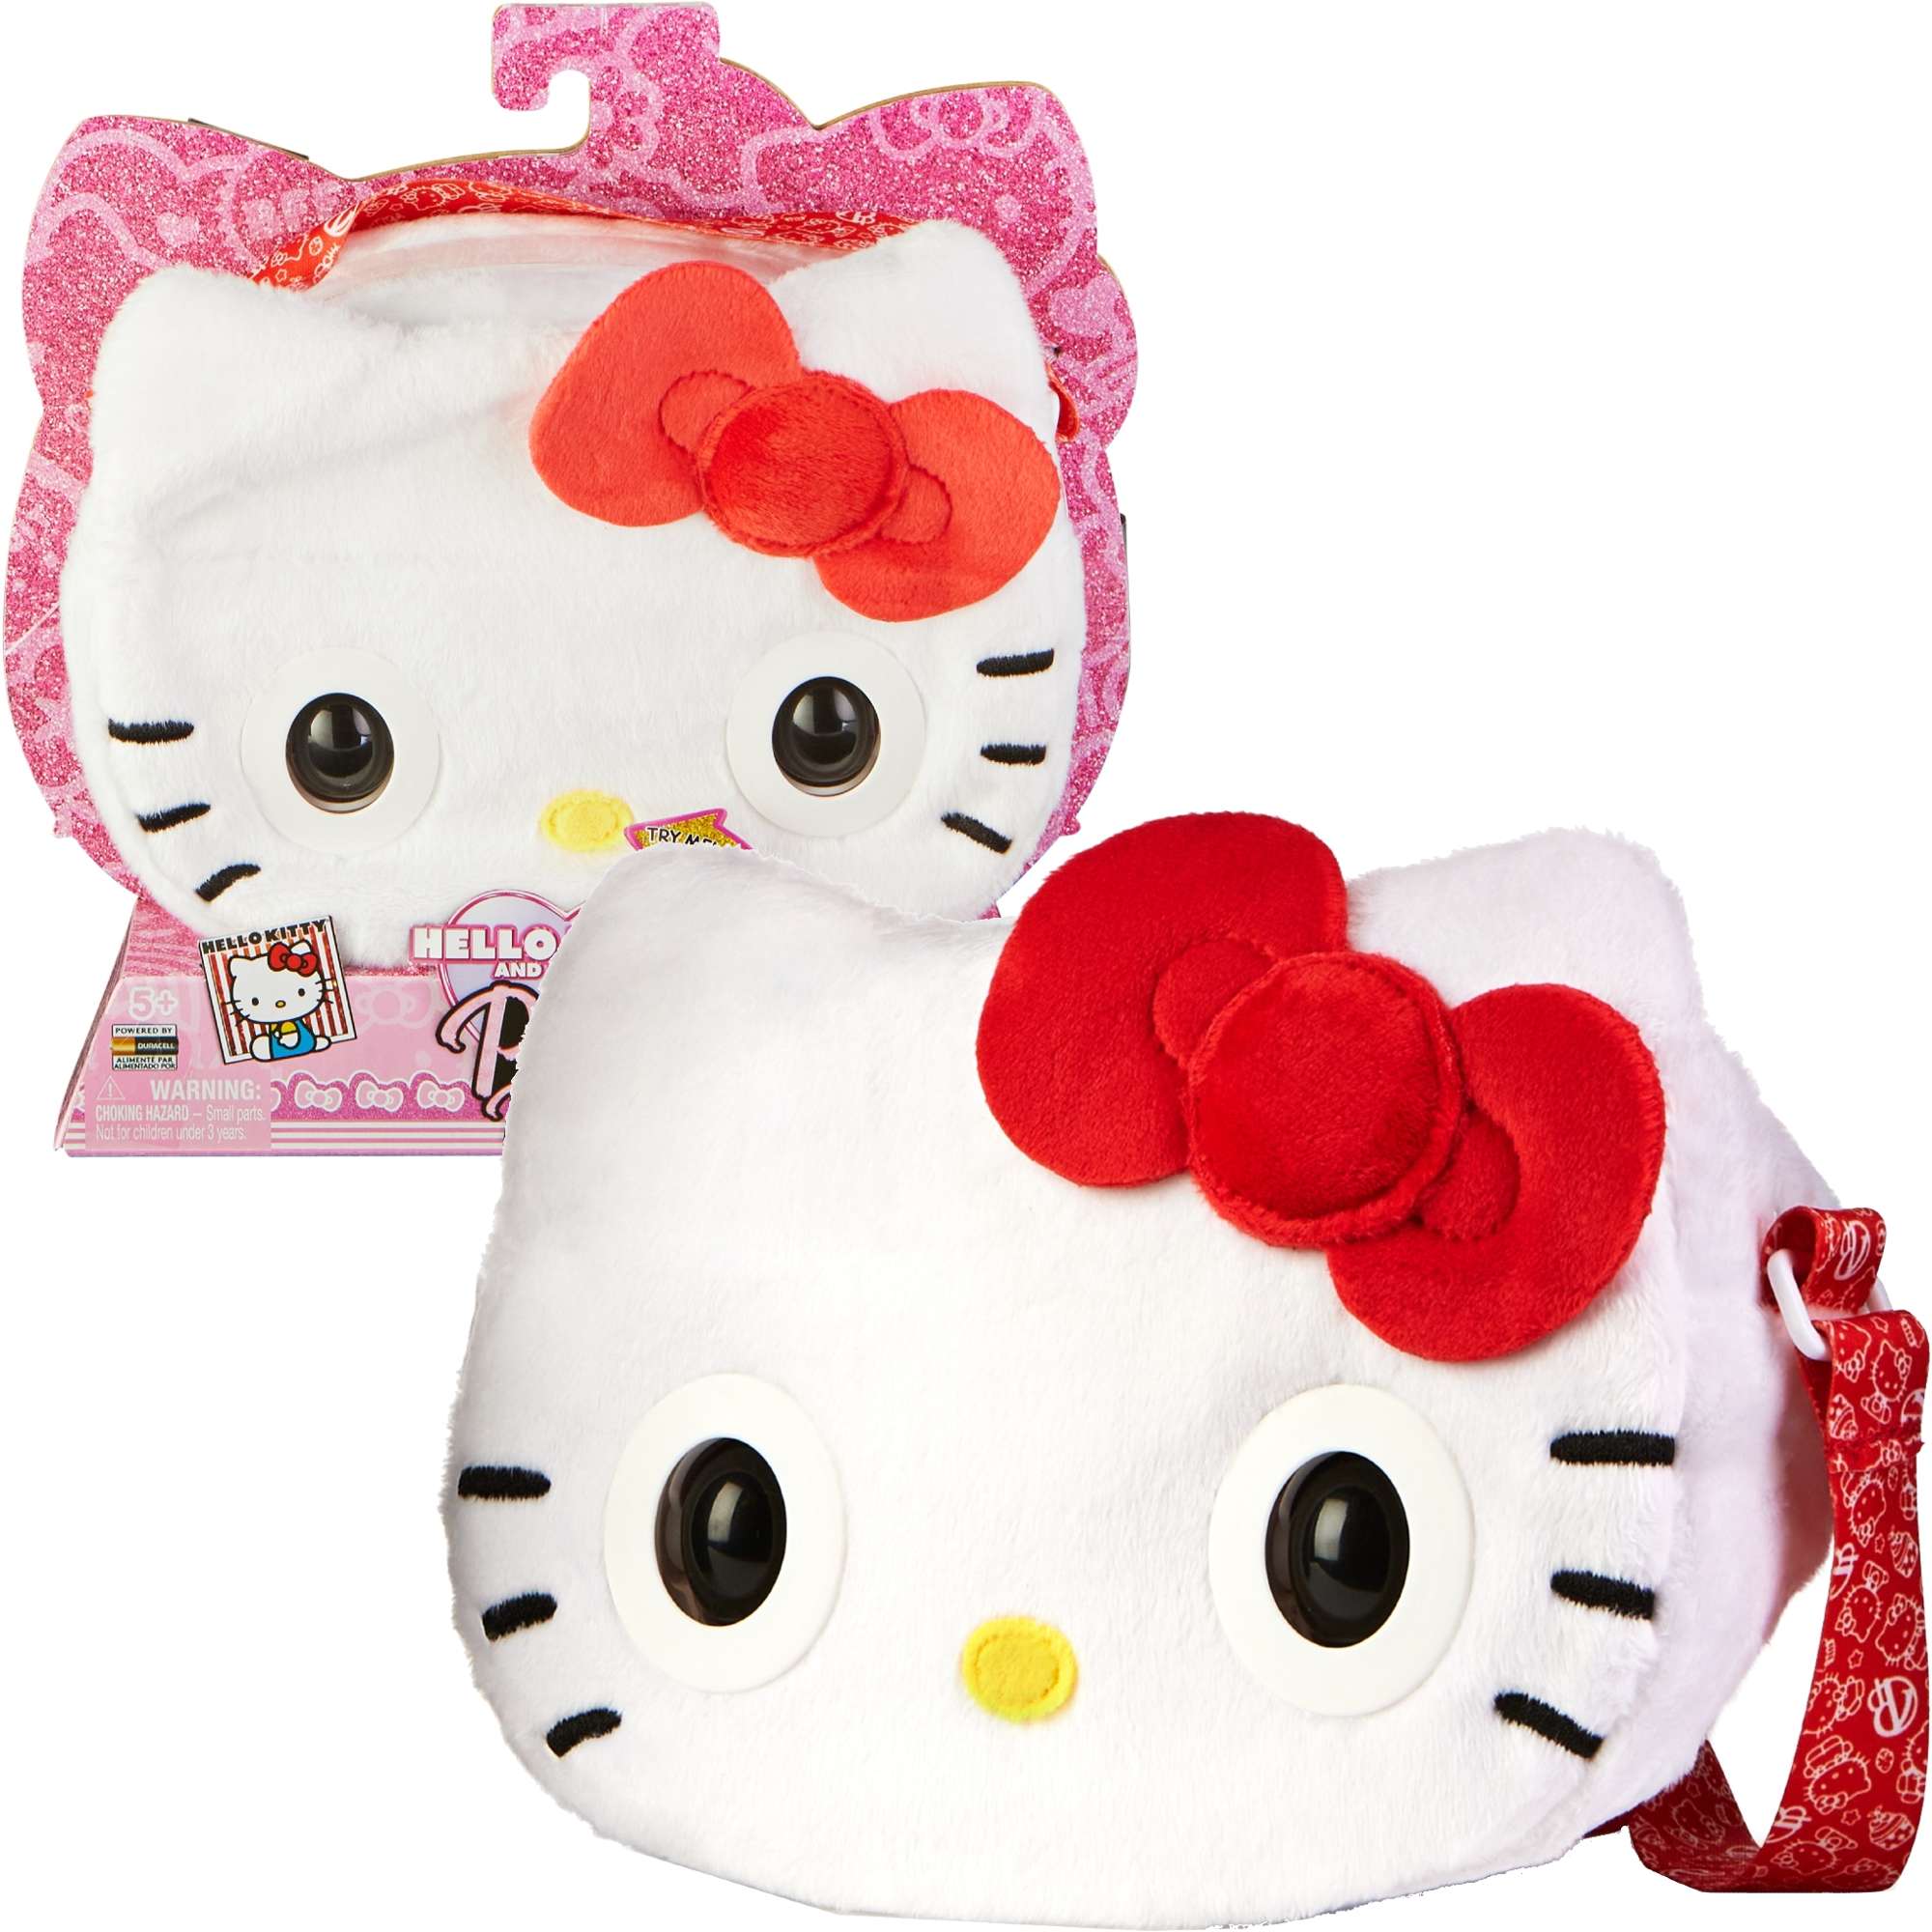 Purse Pets Hello Kitty Kotek Interaktywna torebka z oczami Dwik